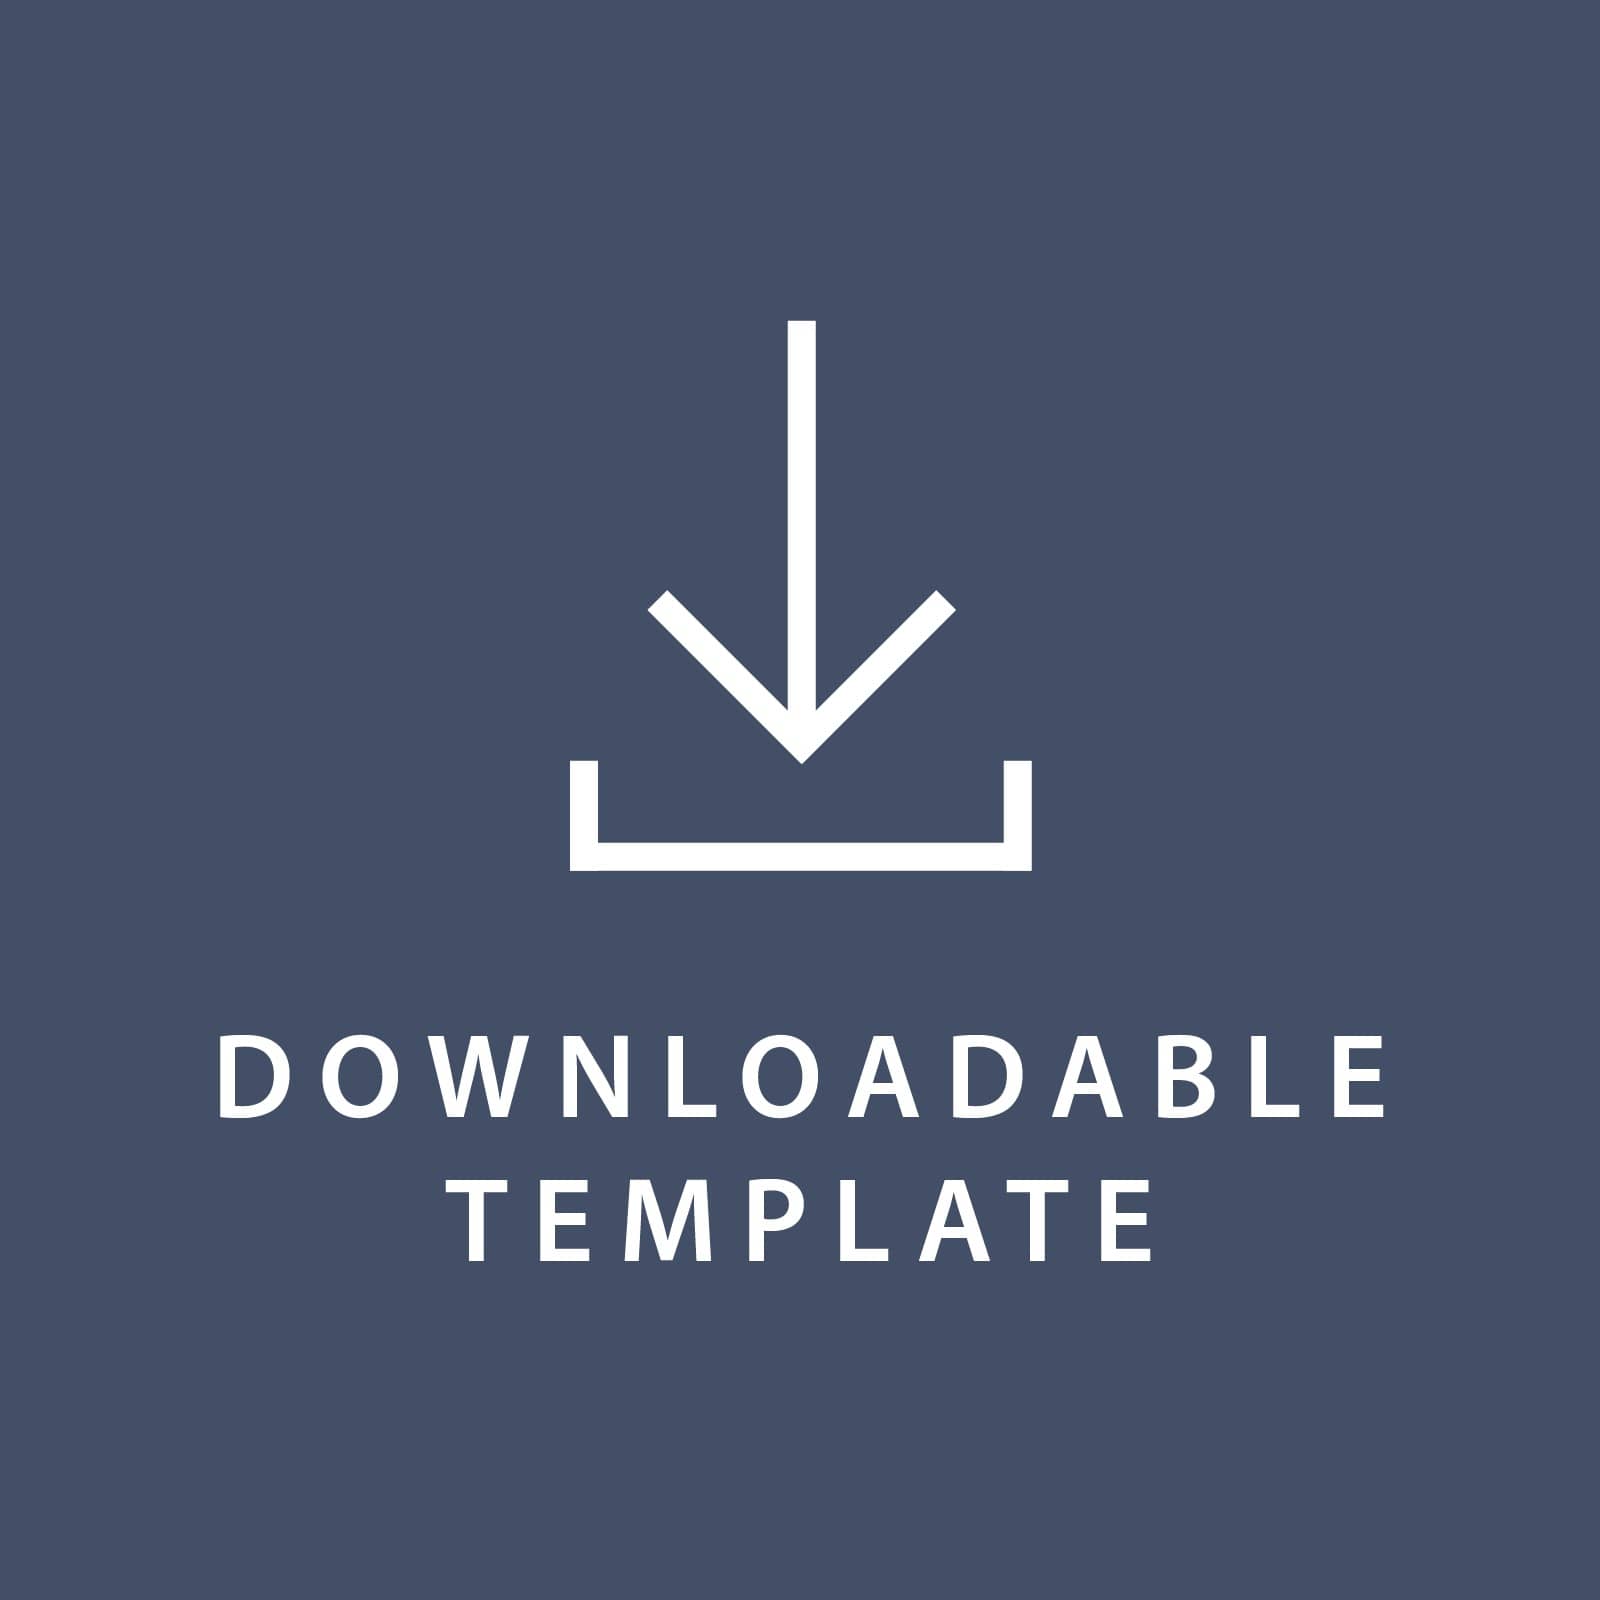 Template for 8.5 x 11 Labels Gartner Studios Template tmplt0899